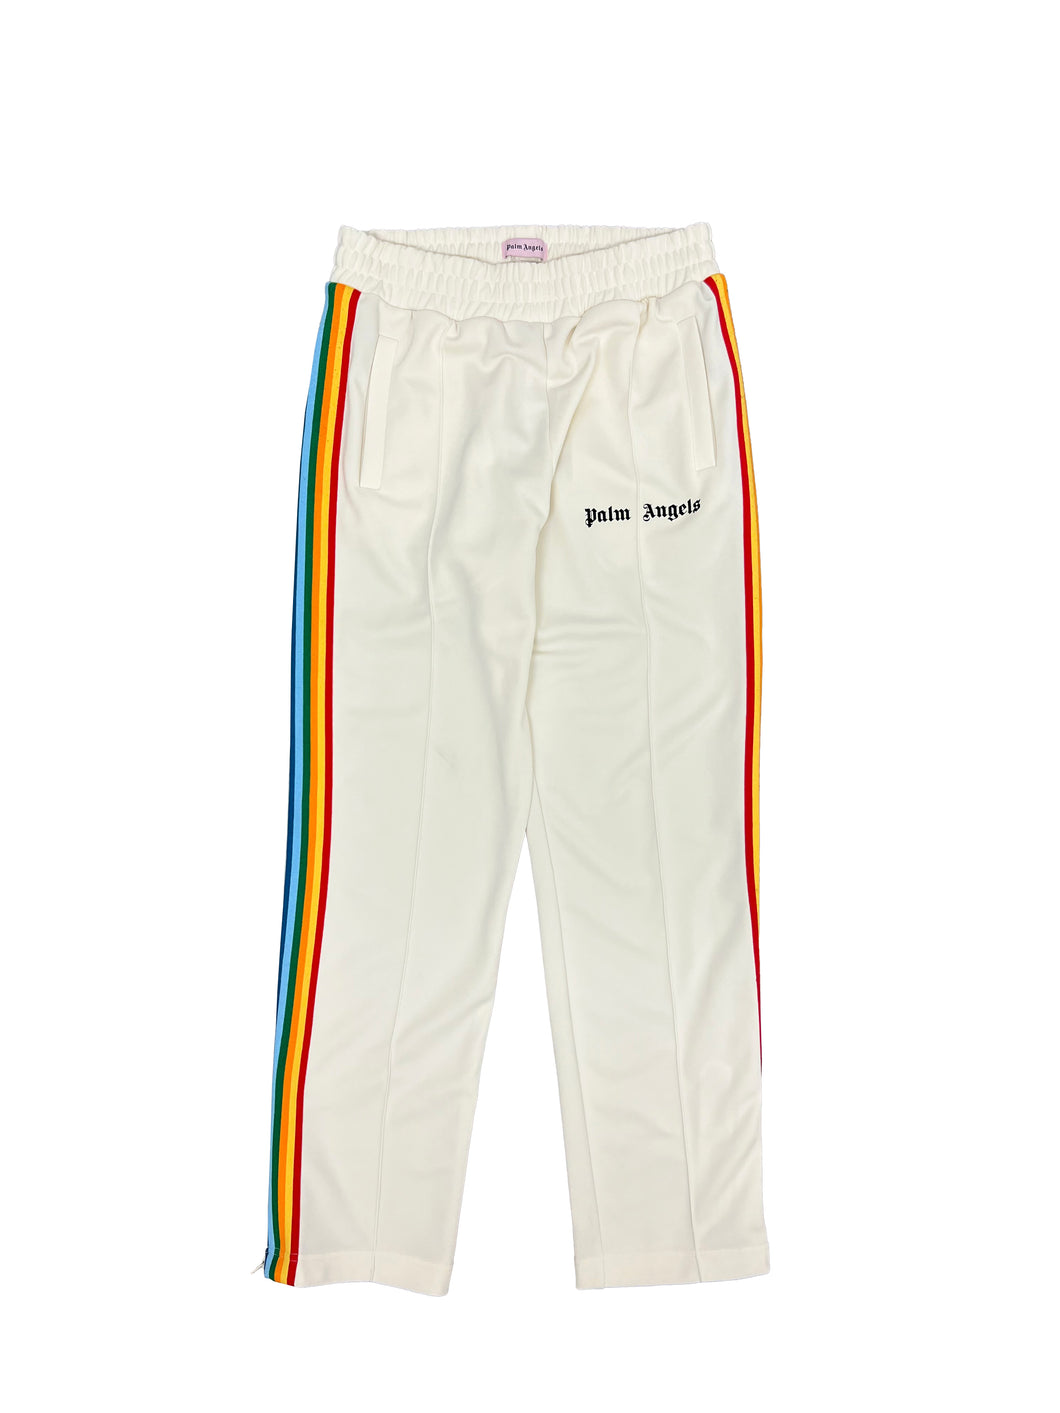 Palm Angels Rainbow Track Pants Size L